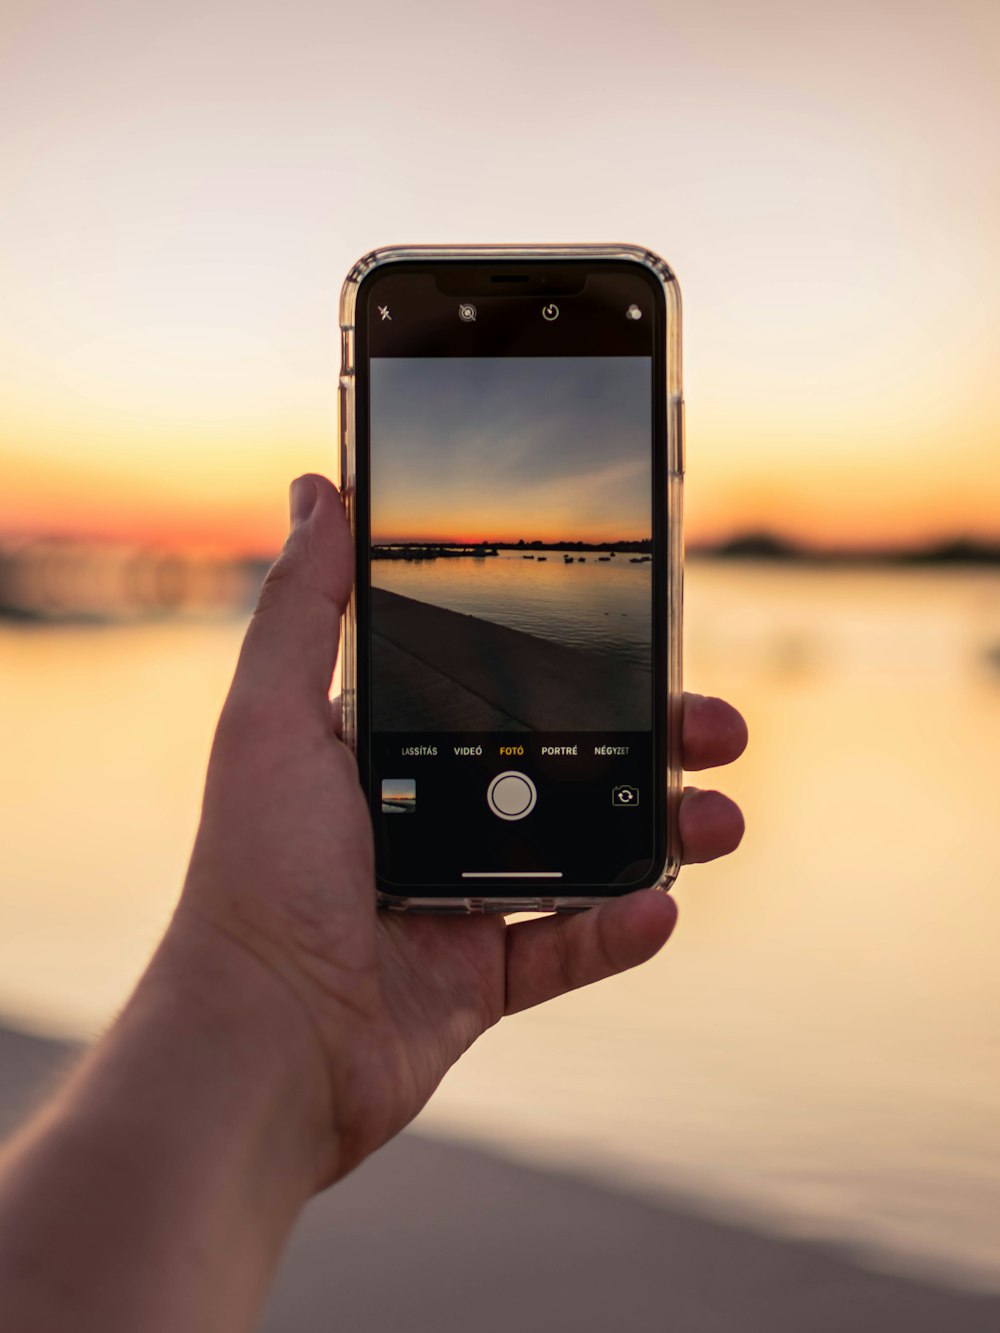 Person, die das iPhone hält, fotografiert den Sonnenuntergang